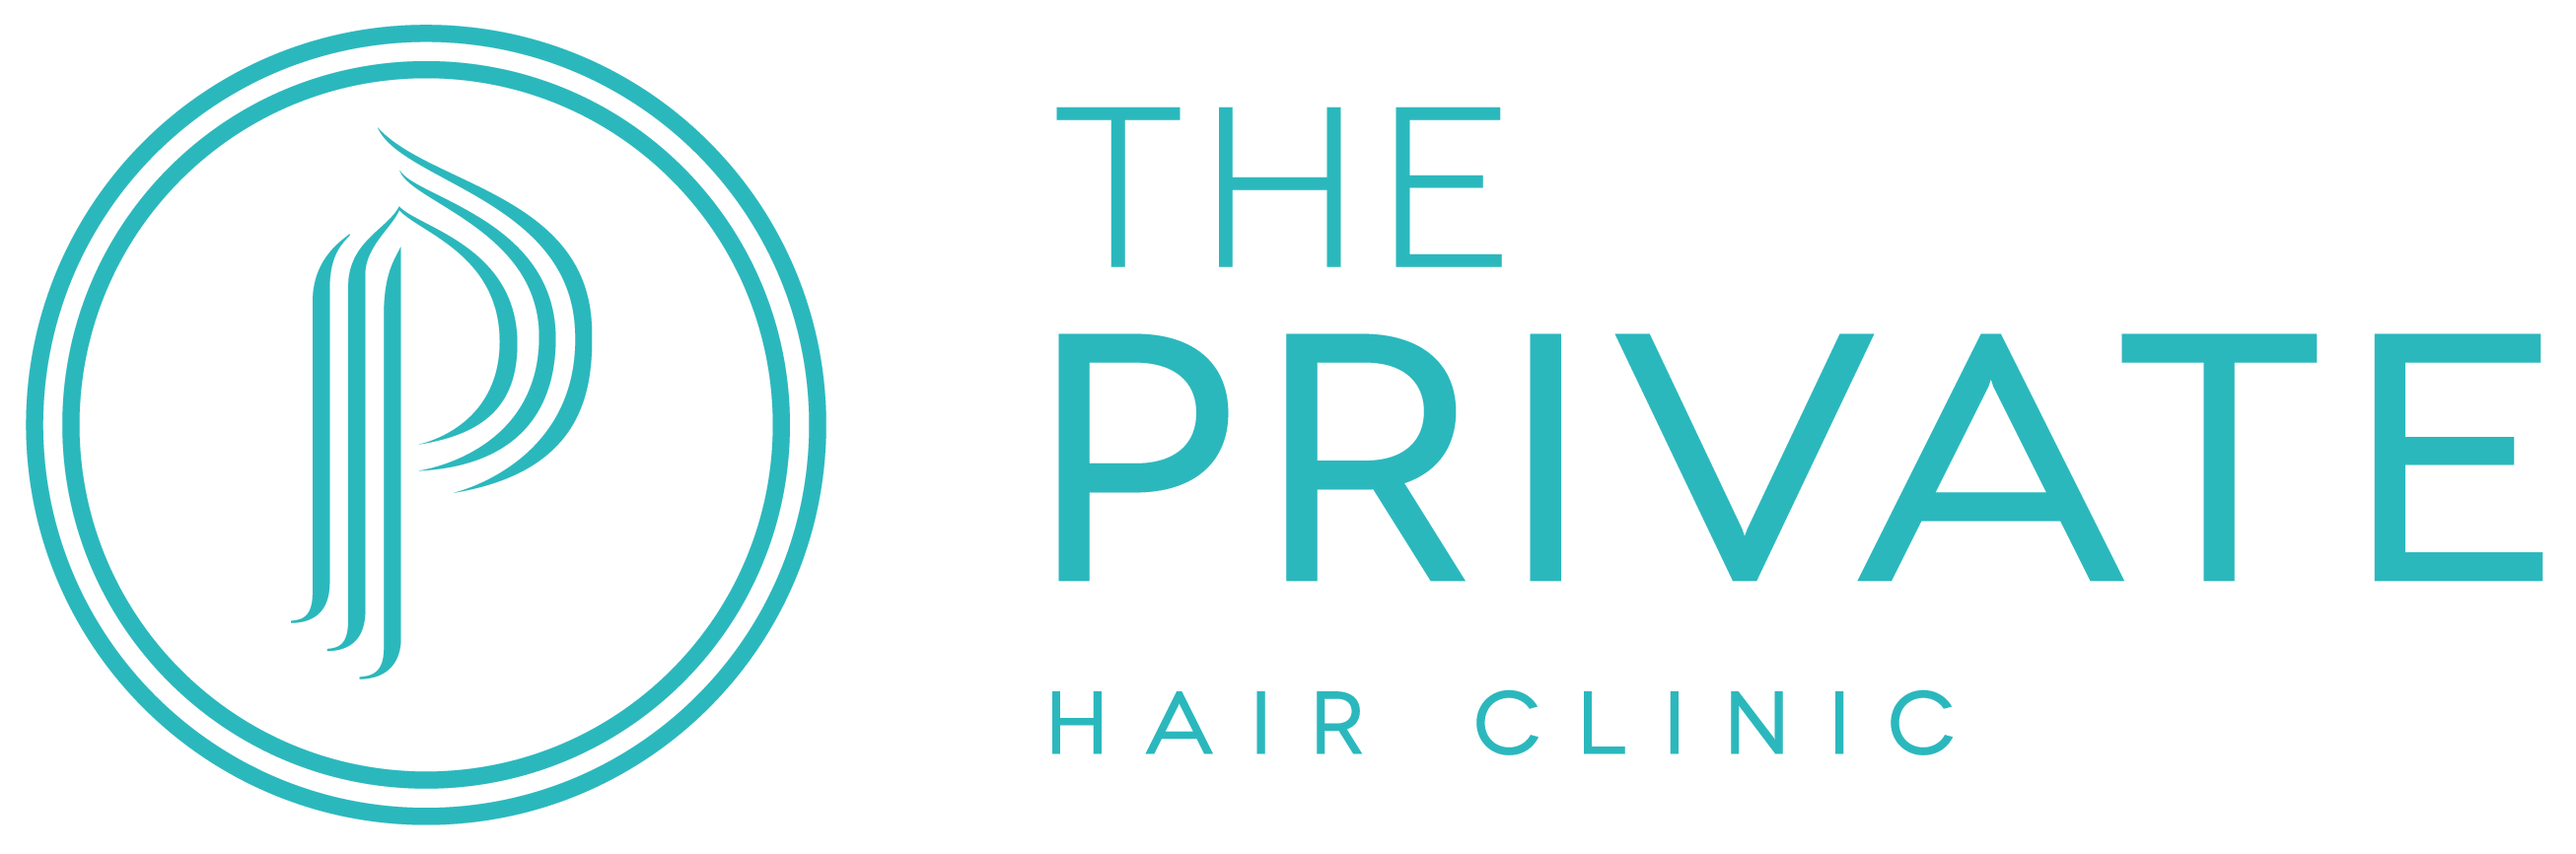 The Private Hair Clinic - Logo